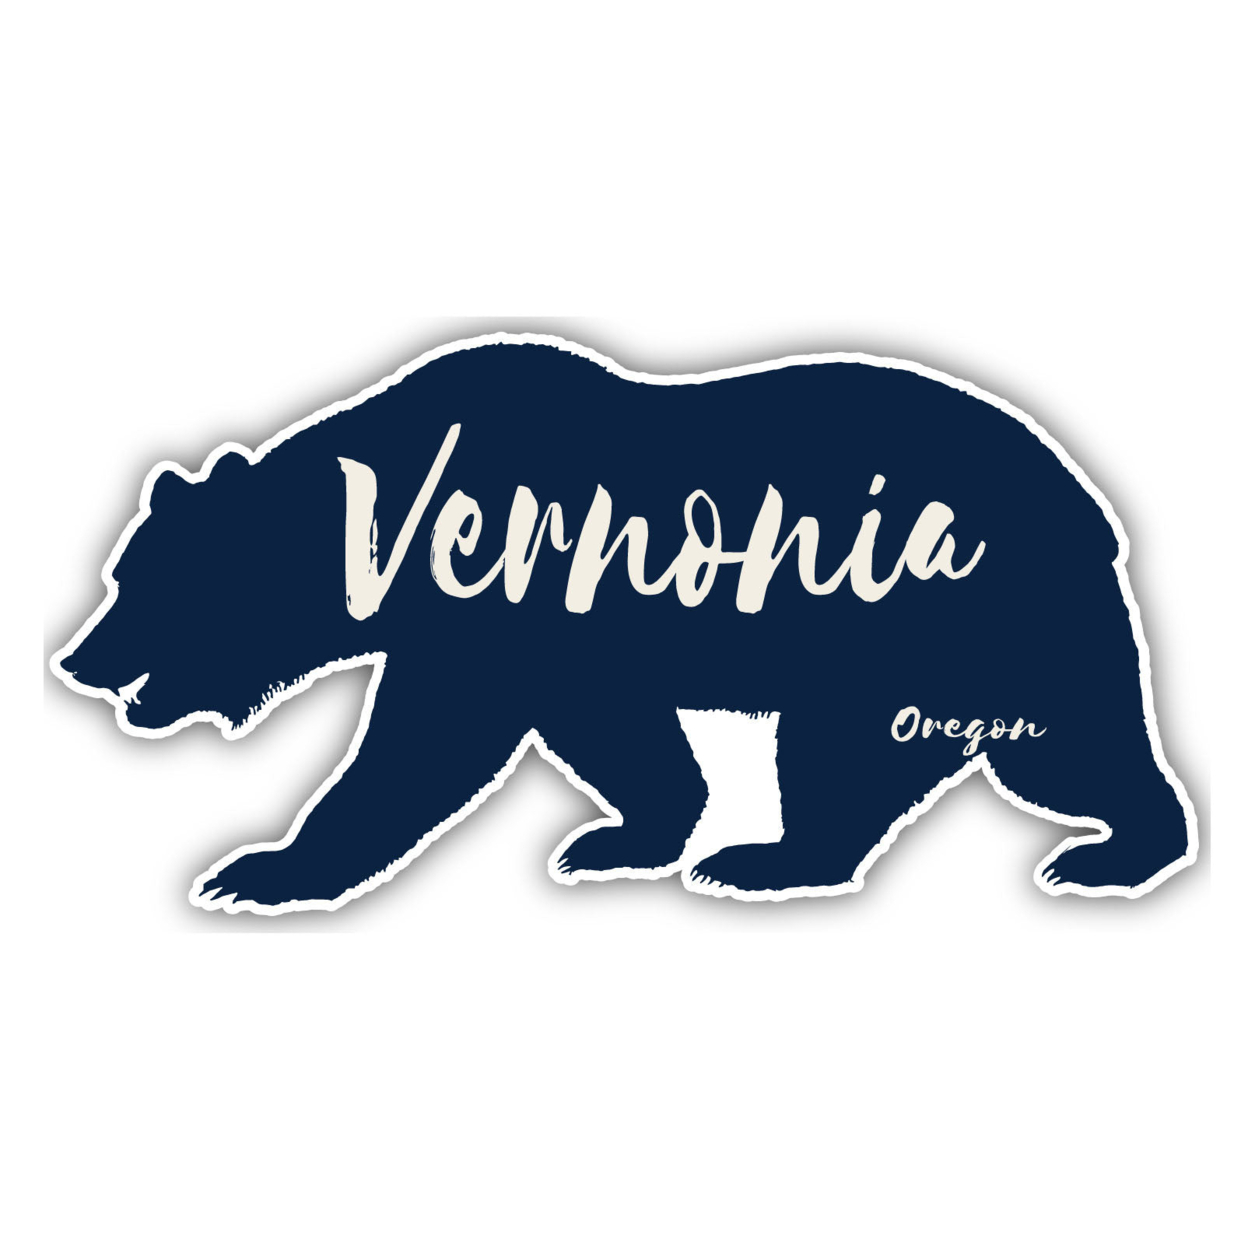 Vernonia Oregon Souvenir Decorative Stickers (Choose Theme And Size) - Single Unit, 2-Inch, Great Outdoors